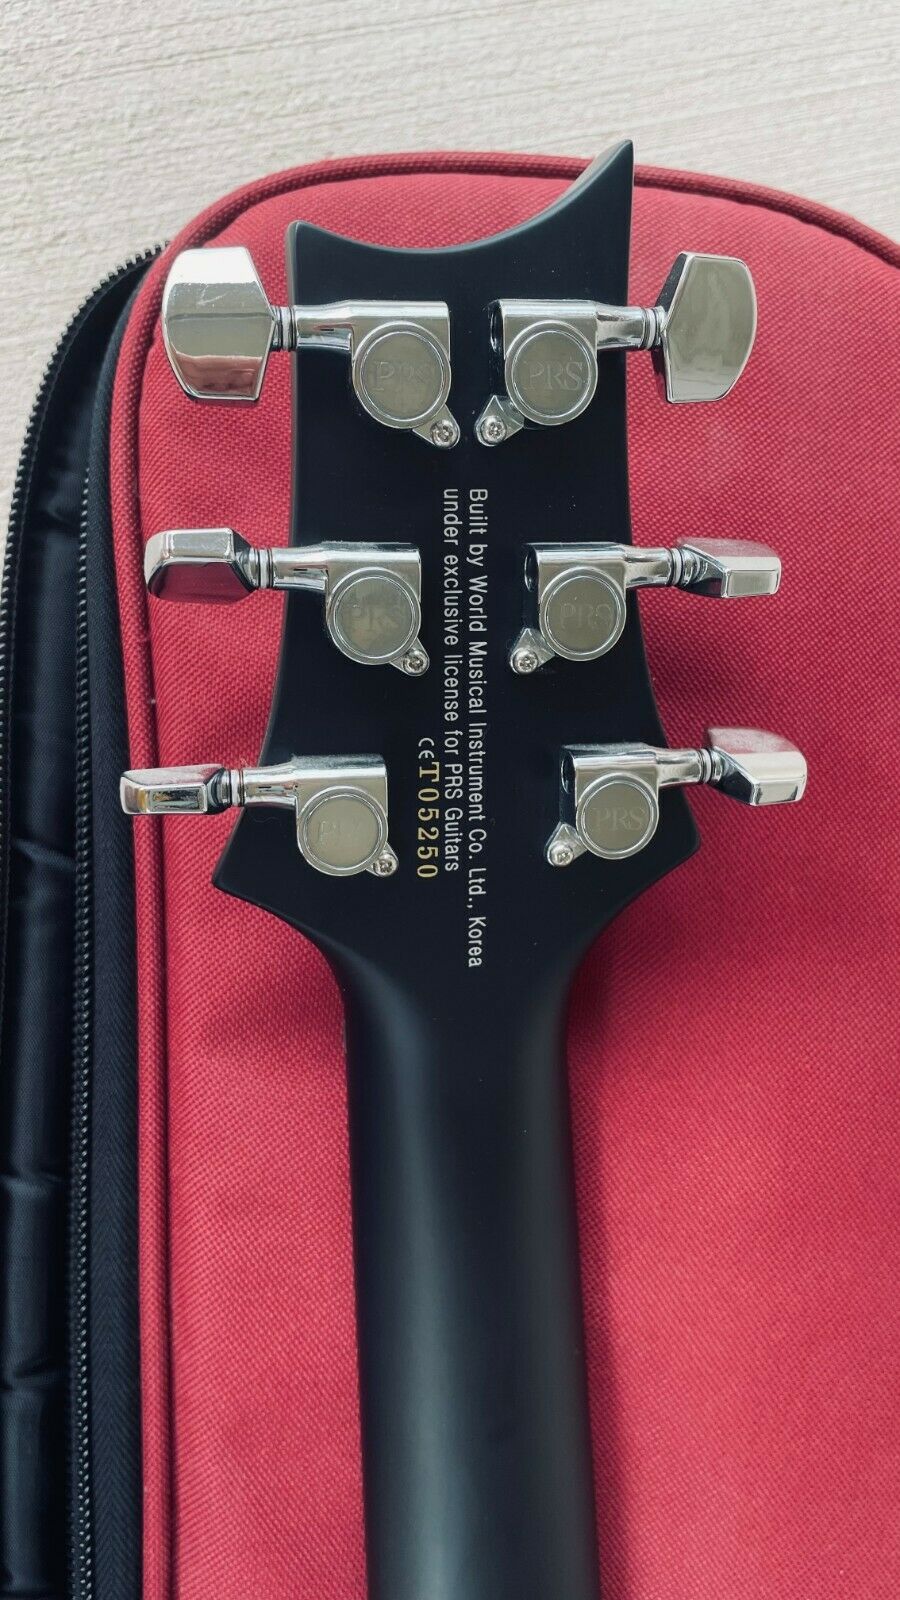 PRS SE Custom 24 Electric Guitar - Quilt Charcoal [STUDIO DISPLAY - MINT]